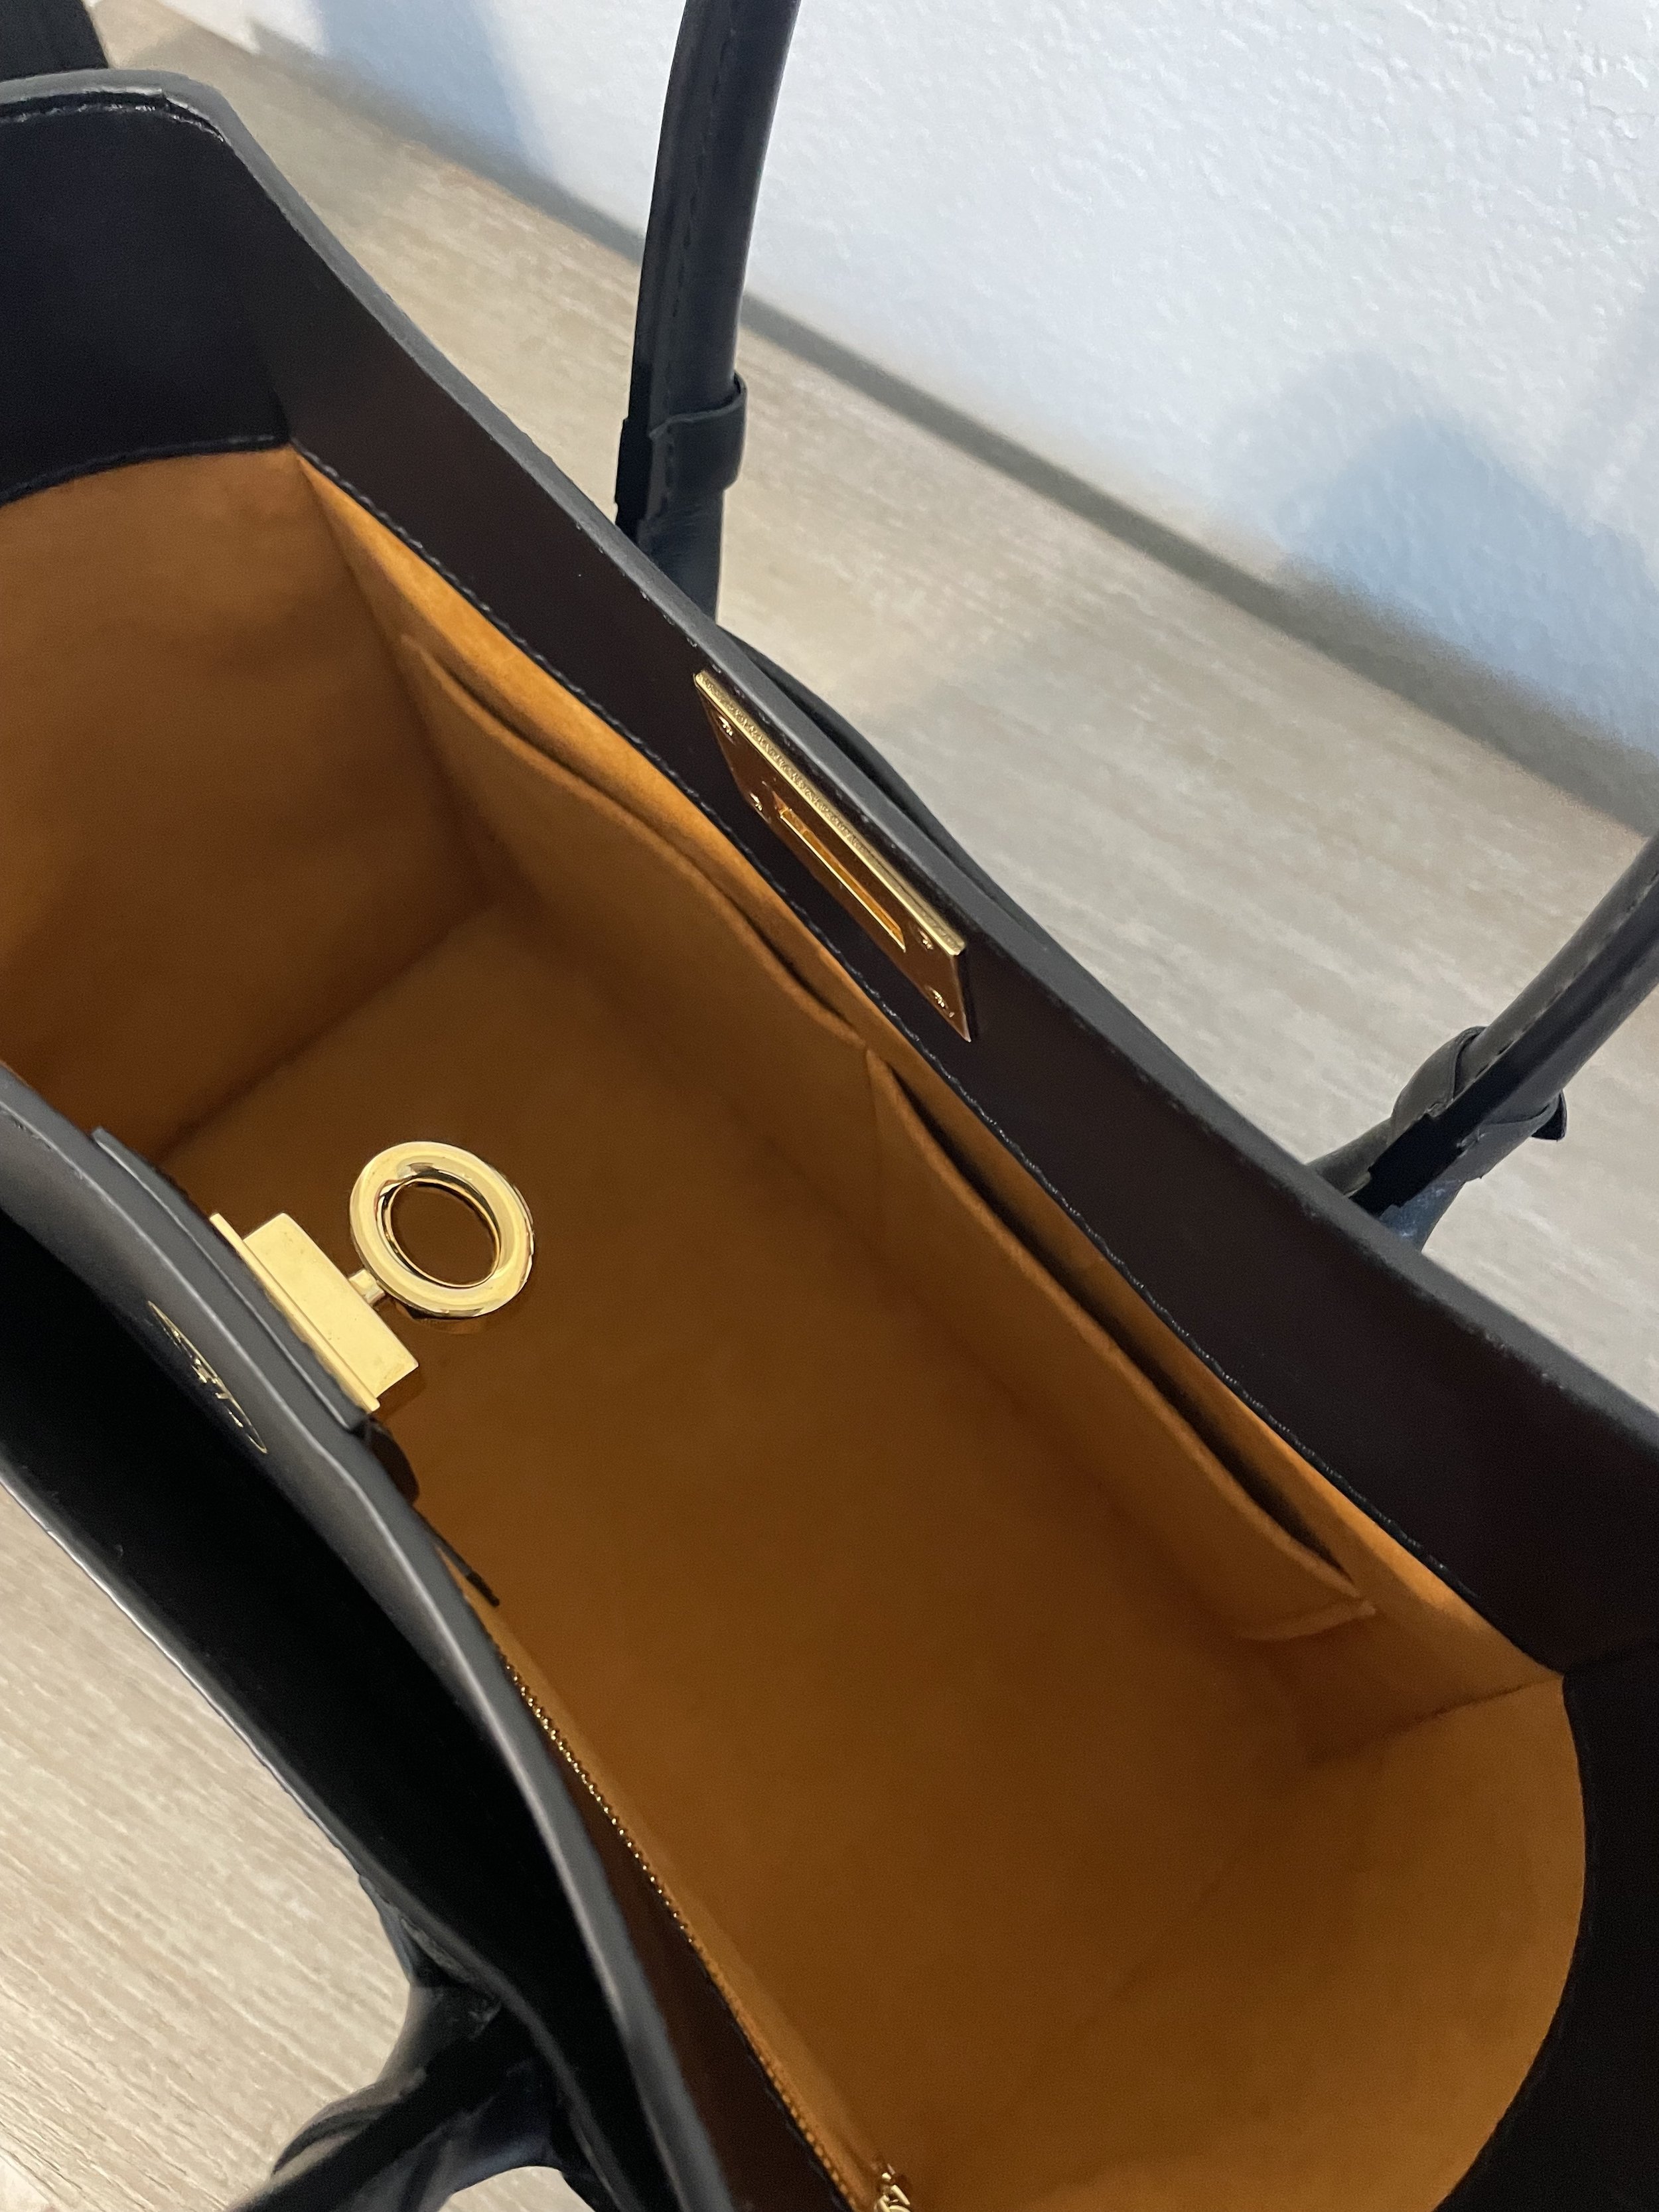 Louis Vuitton Favorite Bag Review- It is such a great bag! 